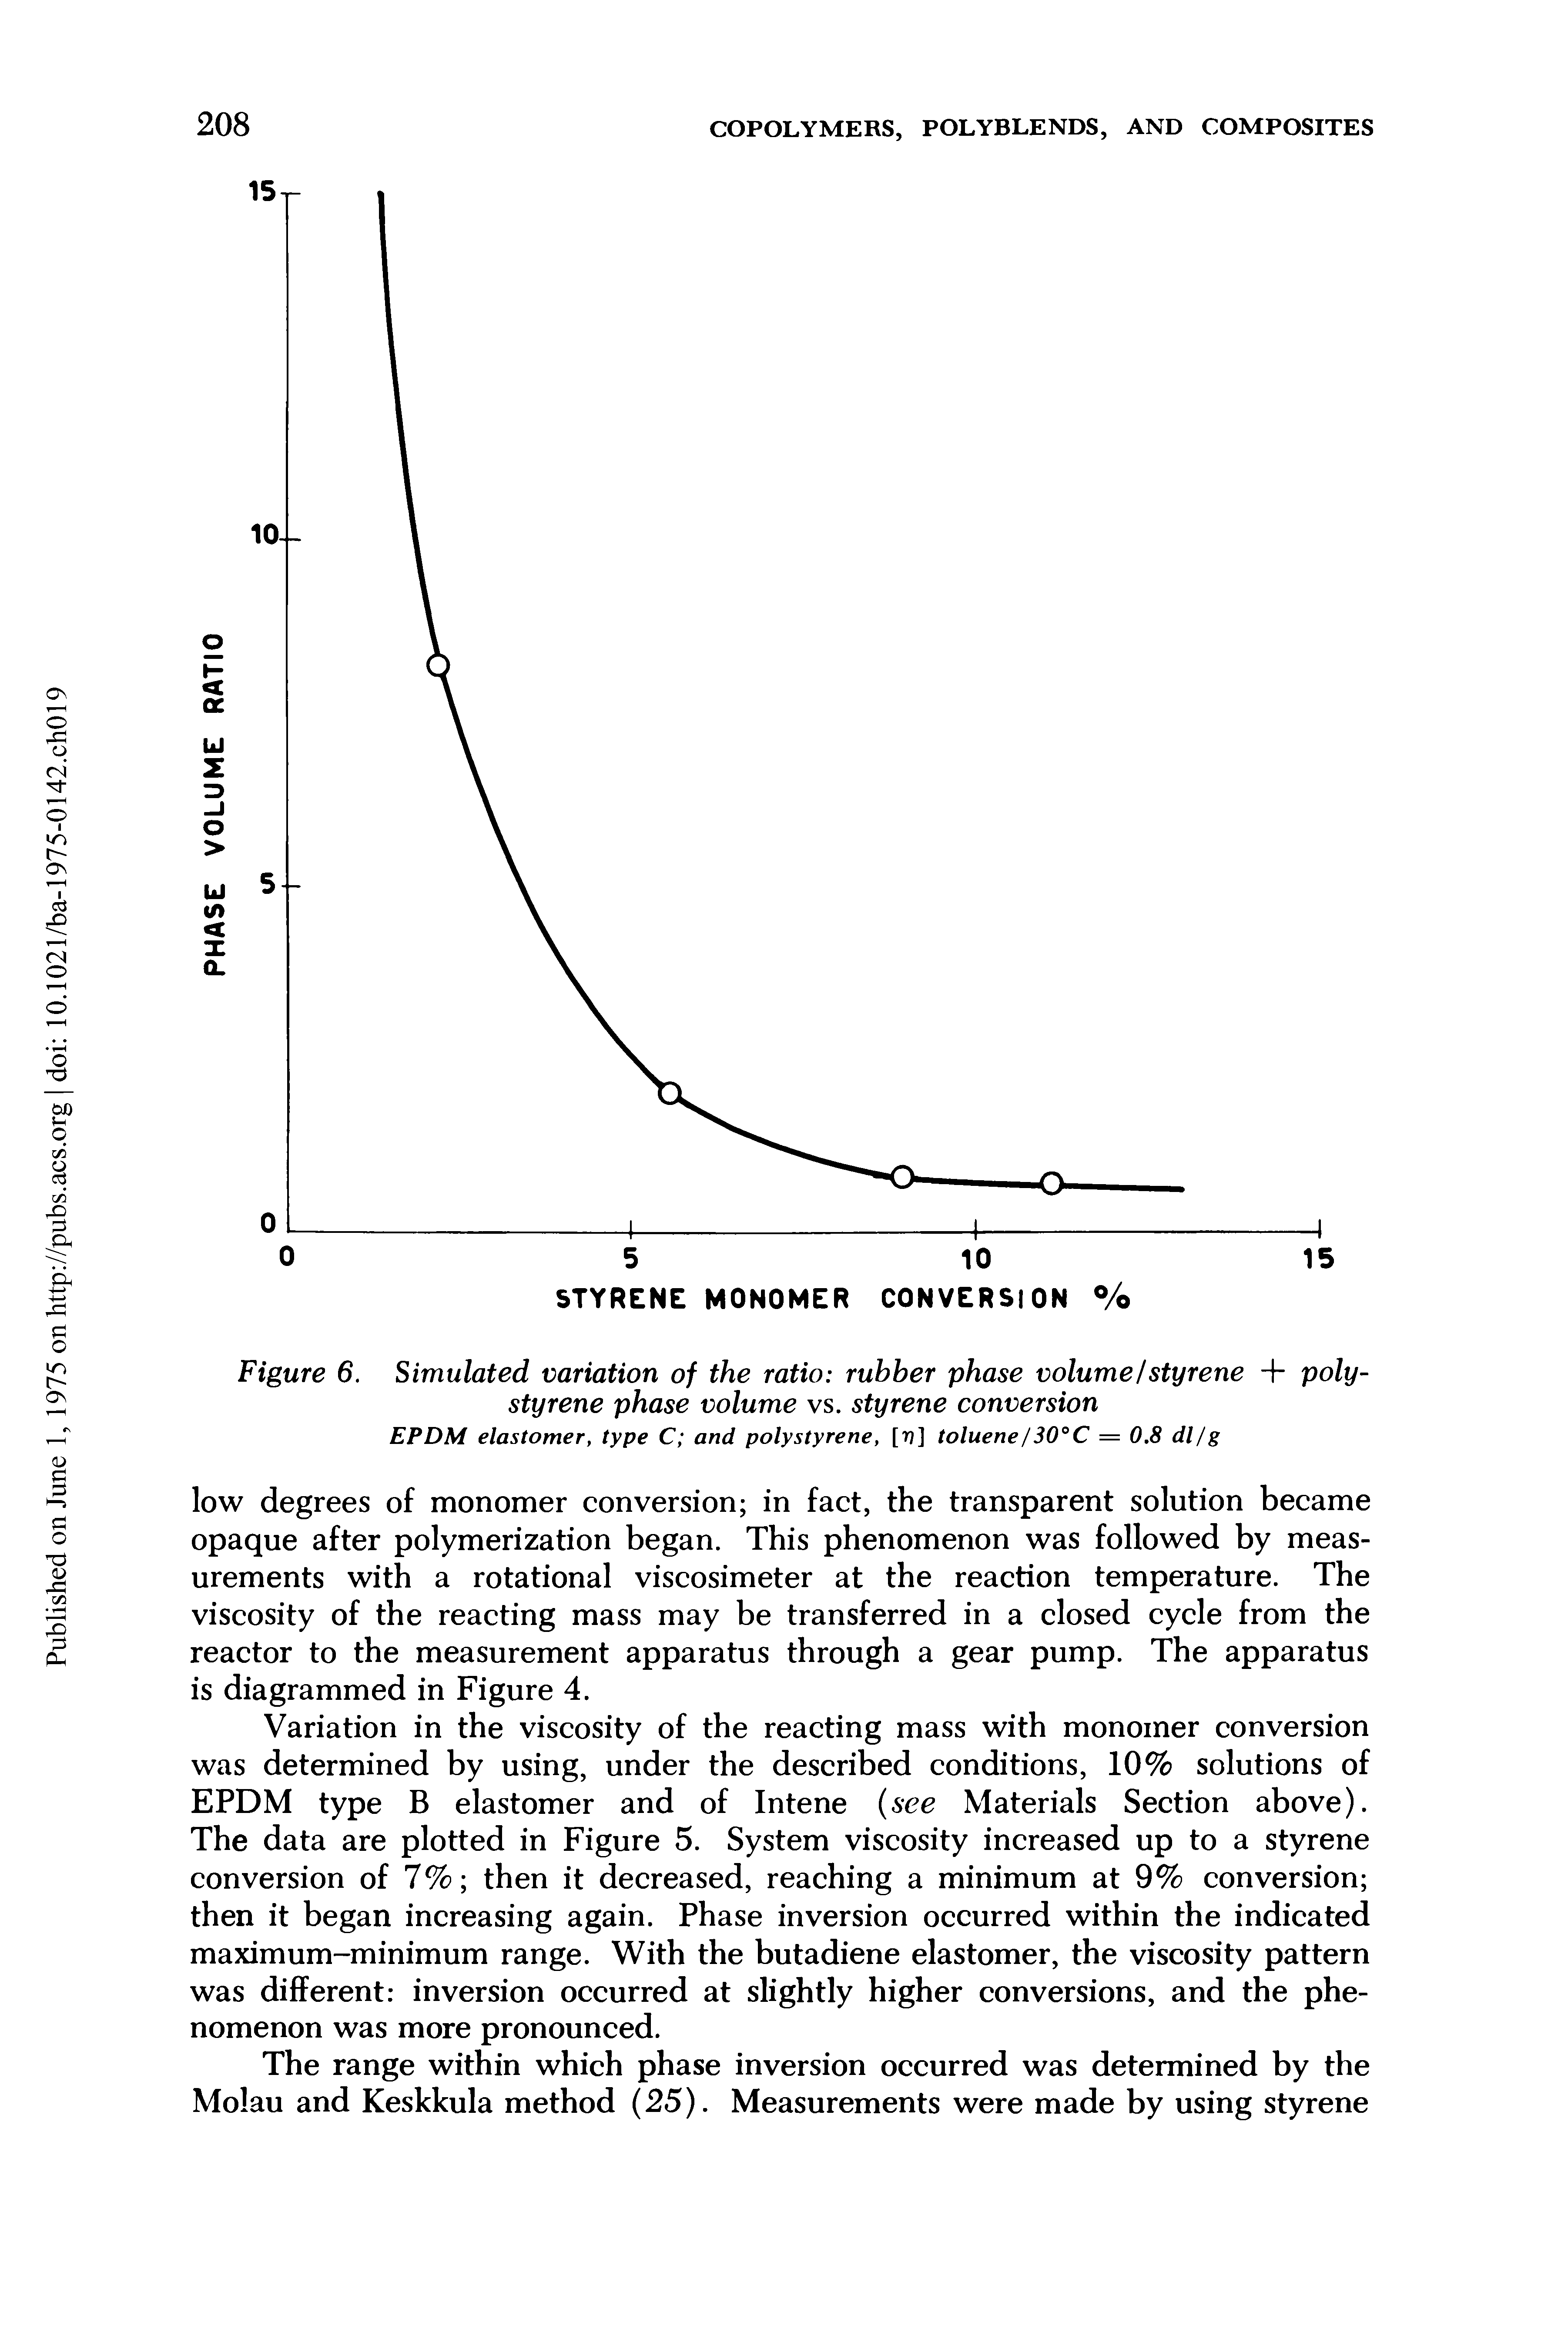 Figure 6. Simulated variation of the ratio rubber phase volume/styrene + polystyrene phase volume vs. styrene conversion EPDM elastomer, type C and polystyrene, [tj] toluene/30°C = 0.8 dl/g...